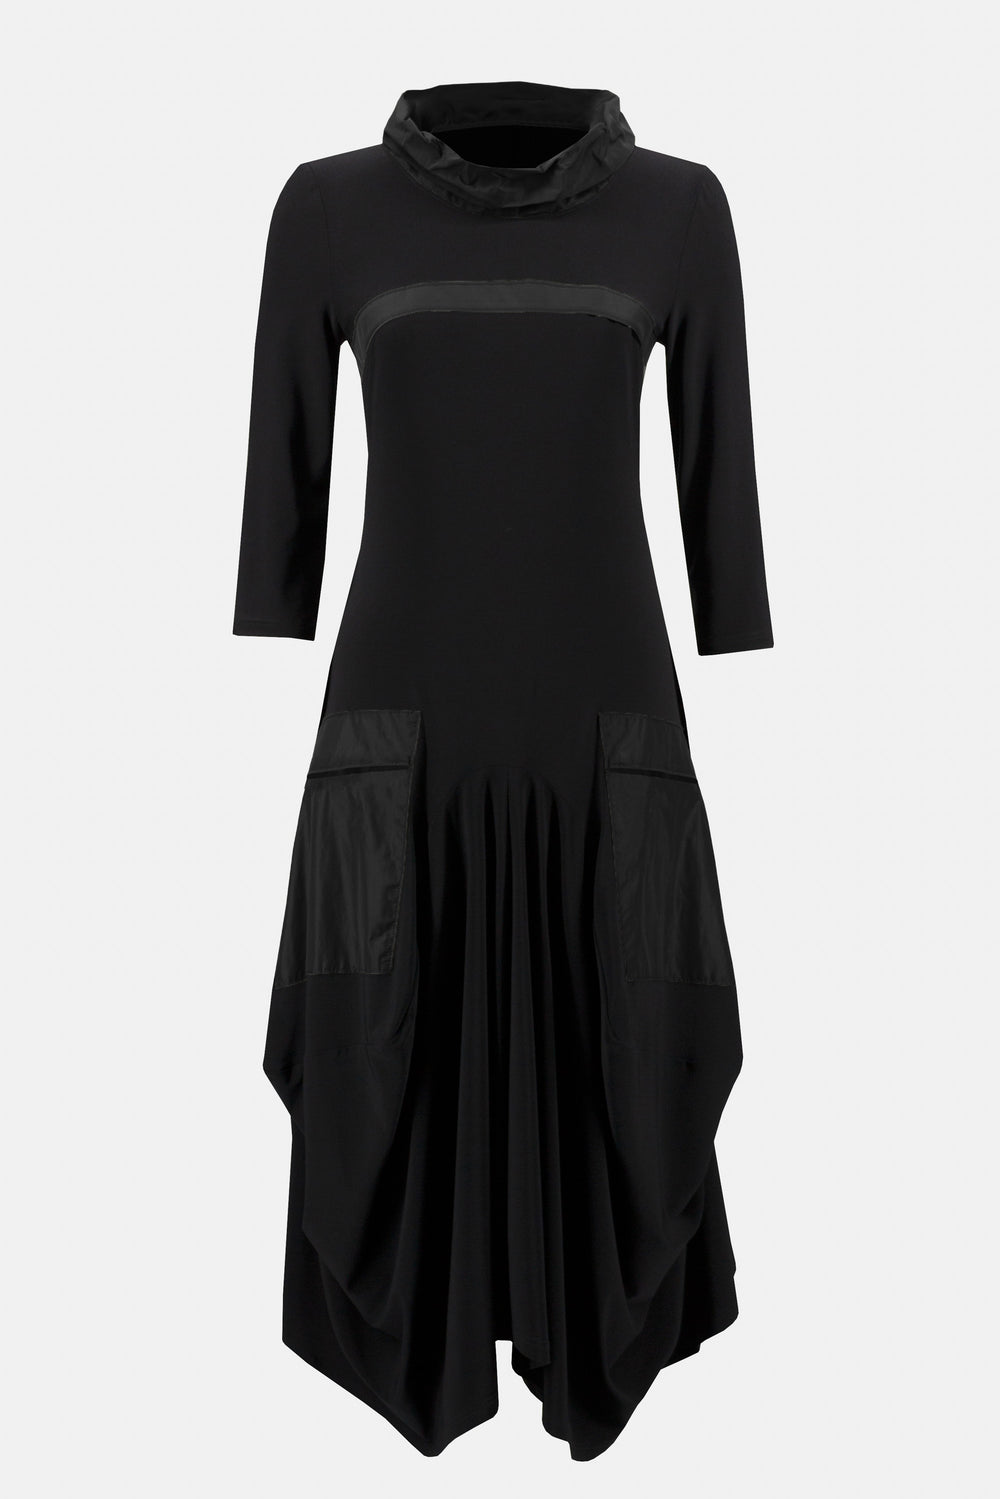 LAST ONE SZ 8 - Joseph Ribkoff Cowl Neck Cocoon Dress with Pockets Style 233110 - Black